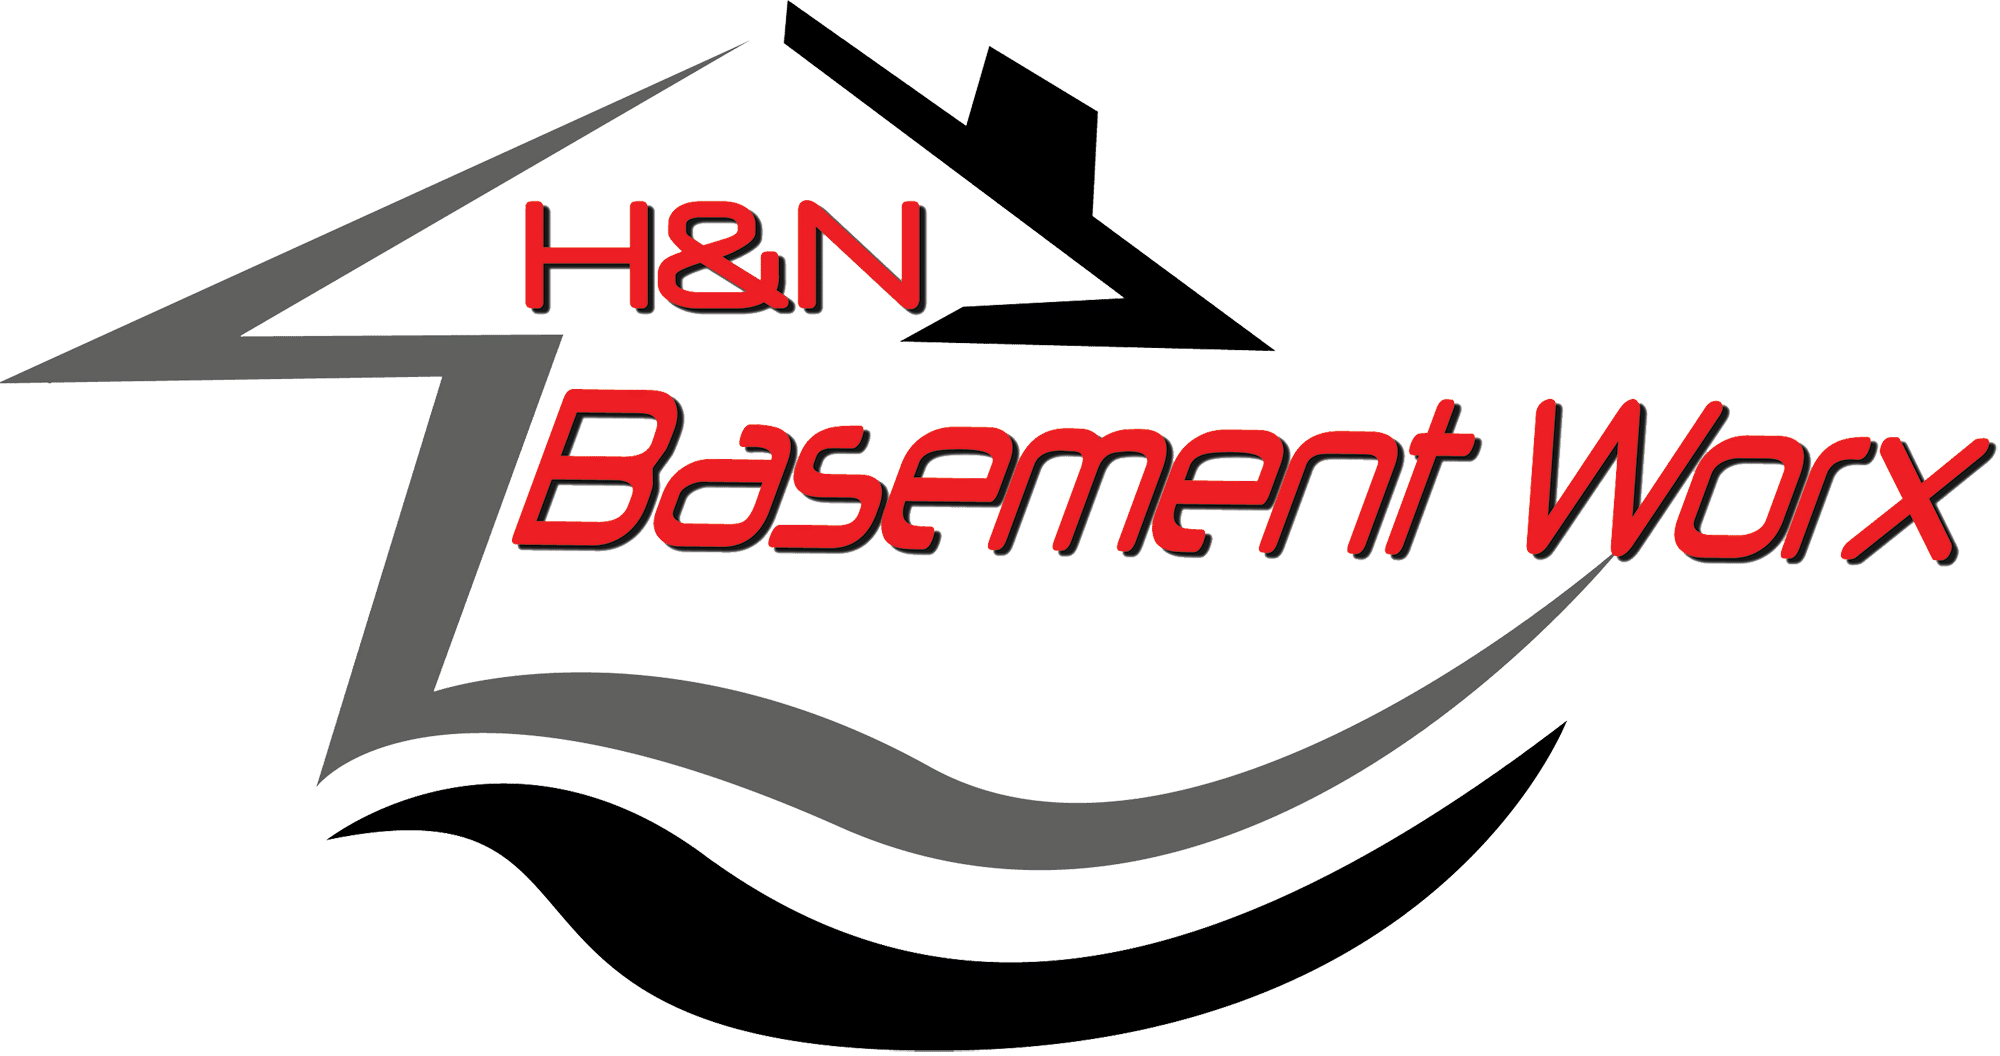 H&N Basement Worx